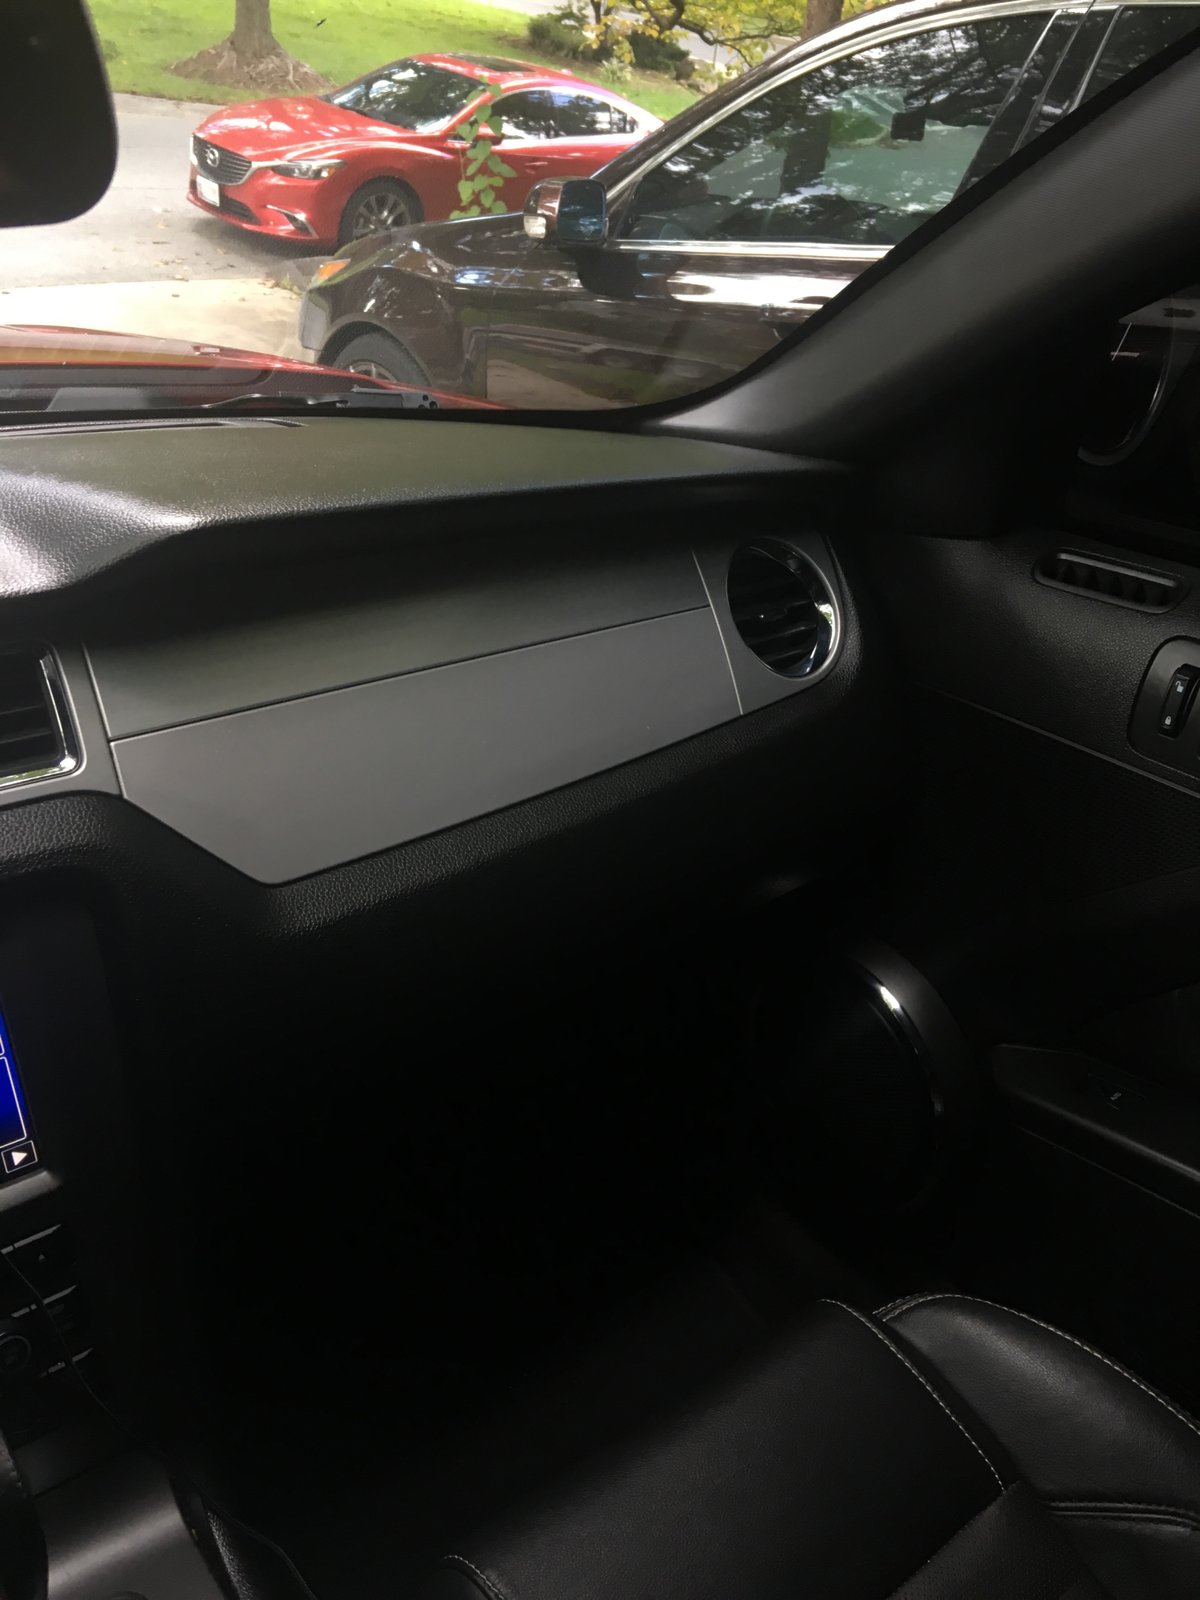 airbag recall.jpg